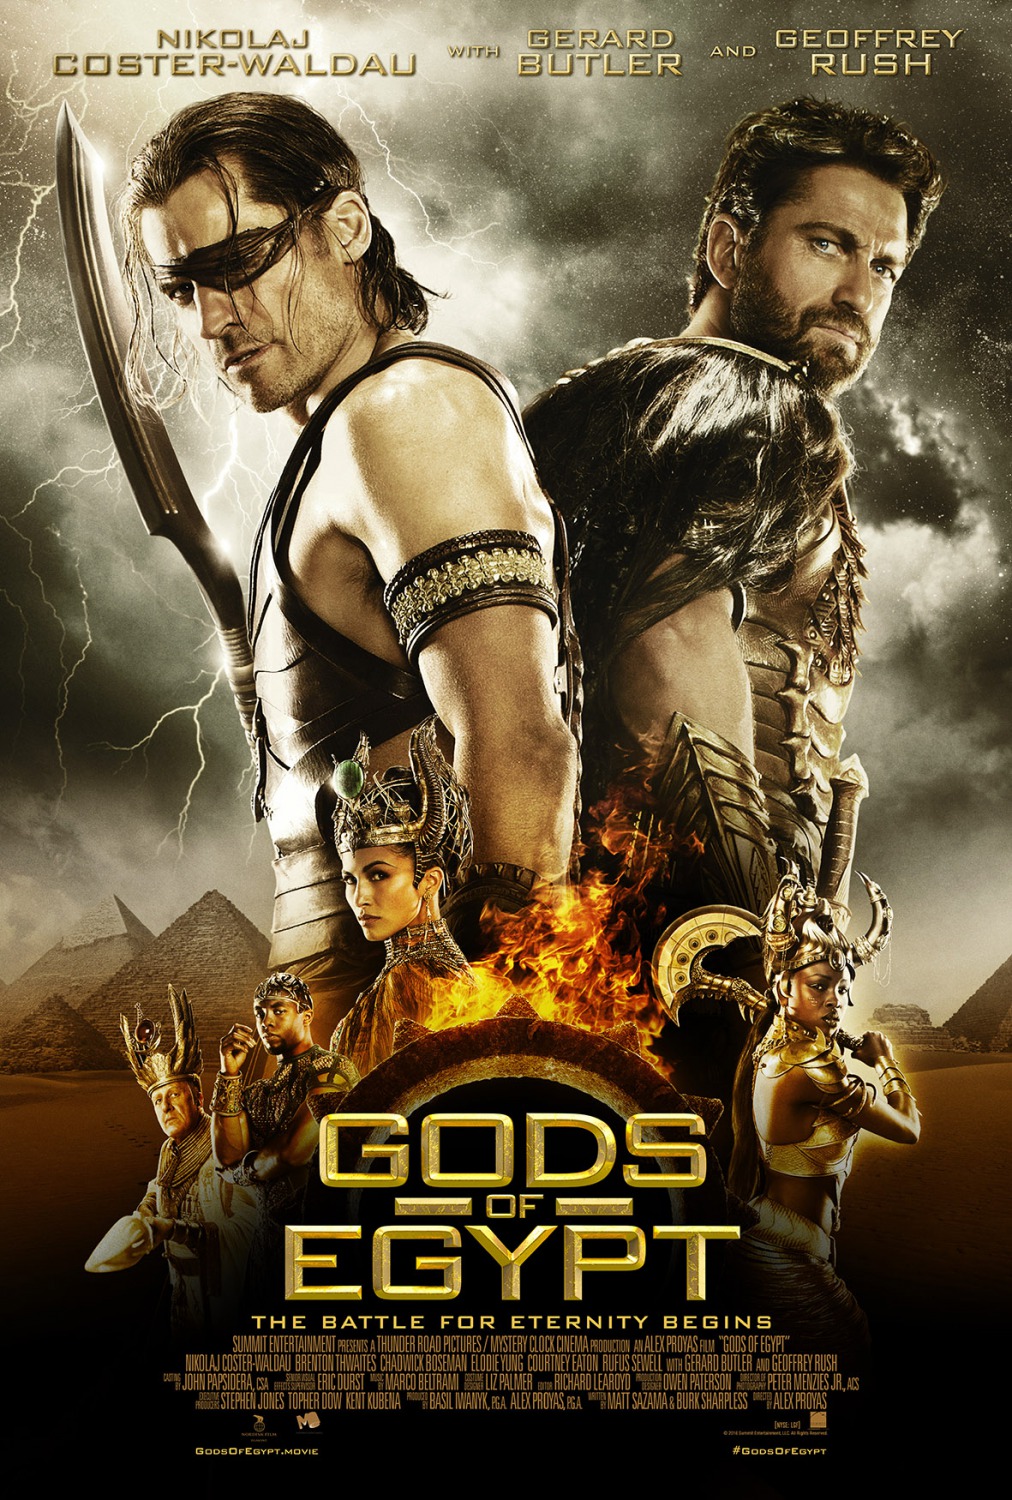 Gods Of Egypt HD wallpapers, Desktop wallpaper - most viewed